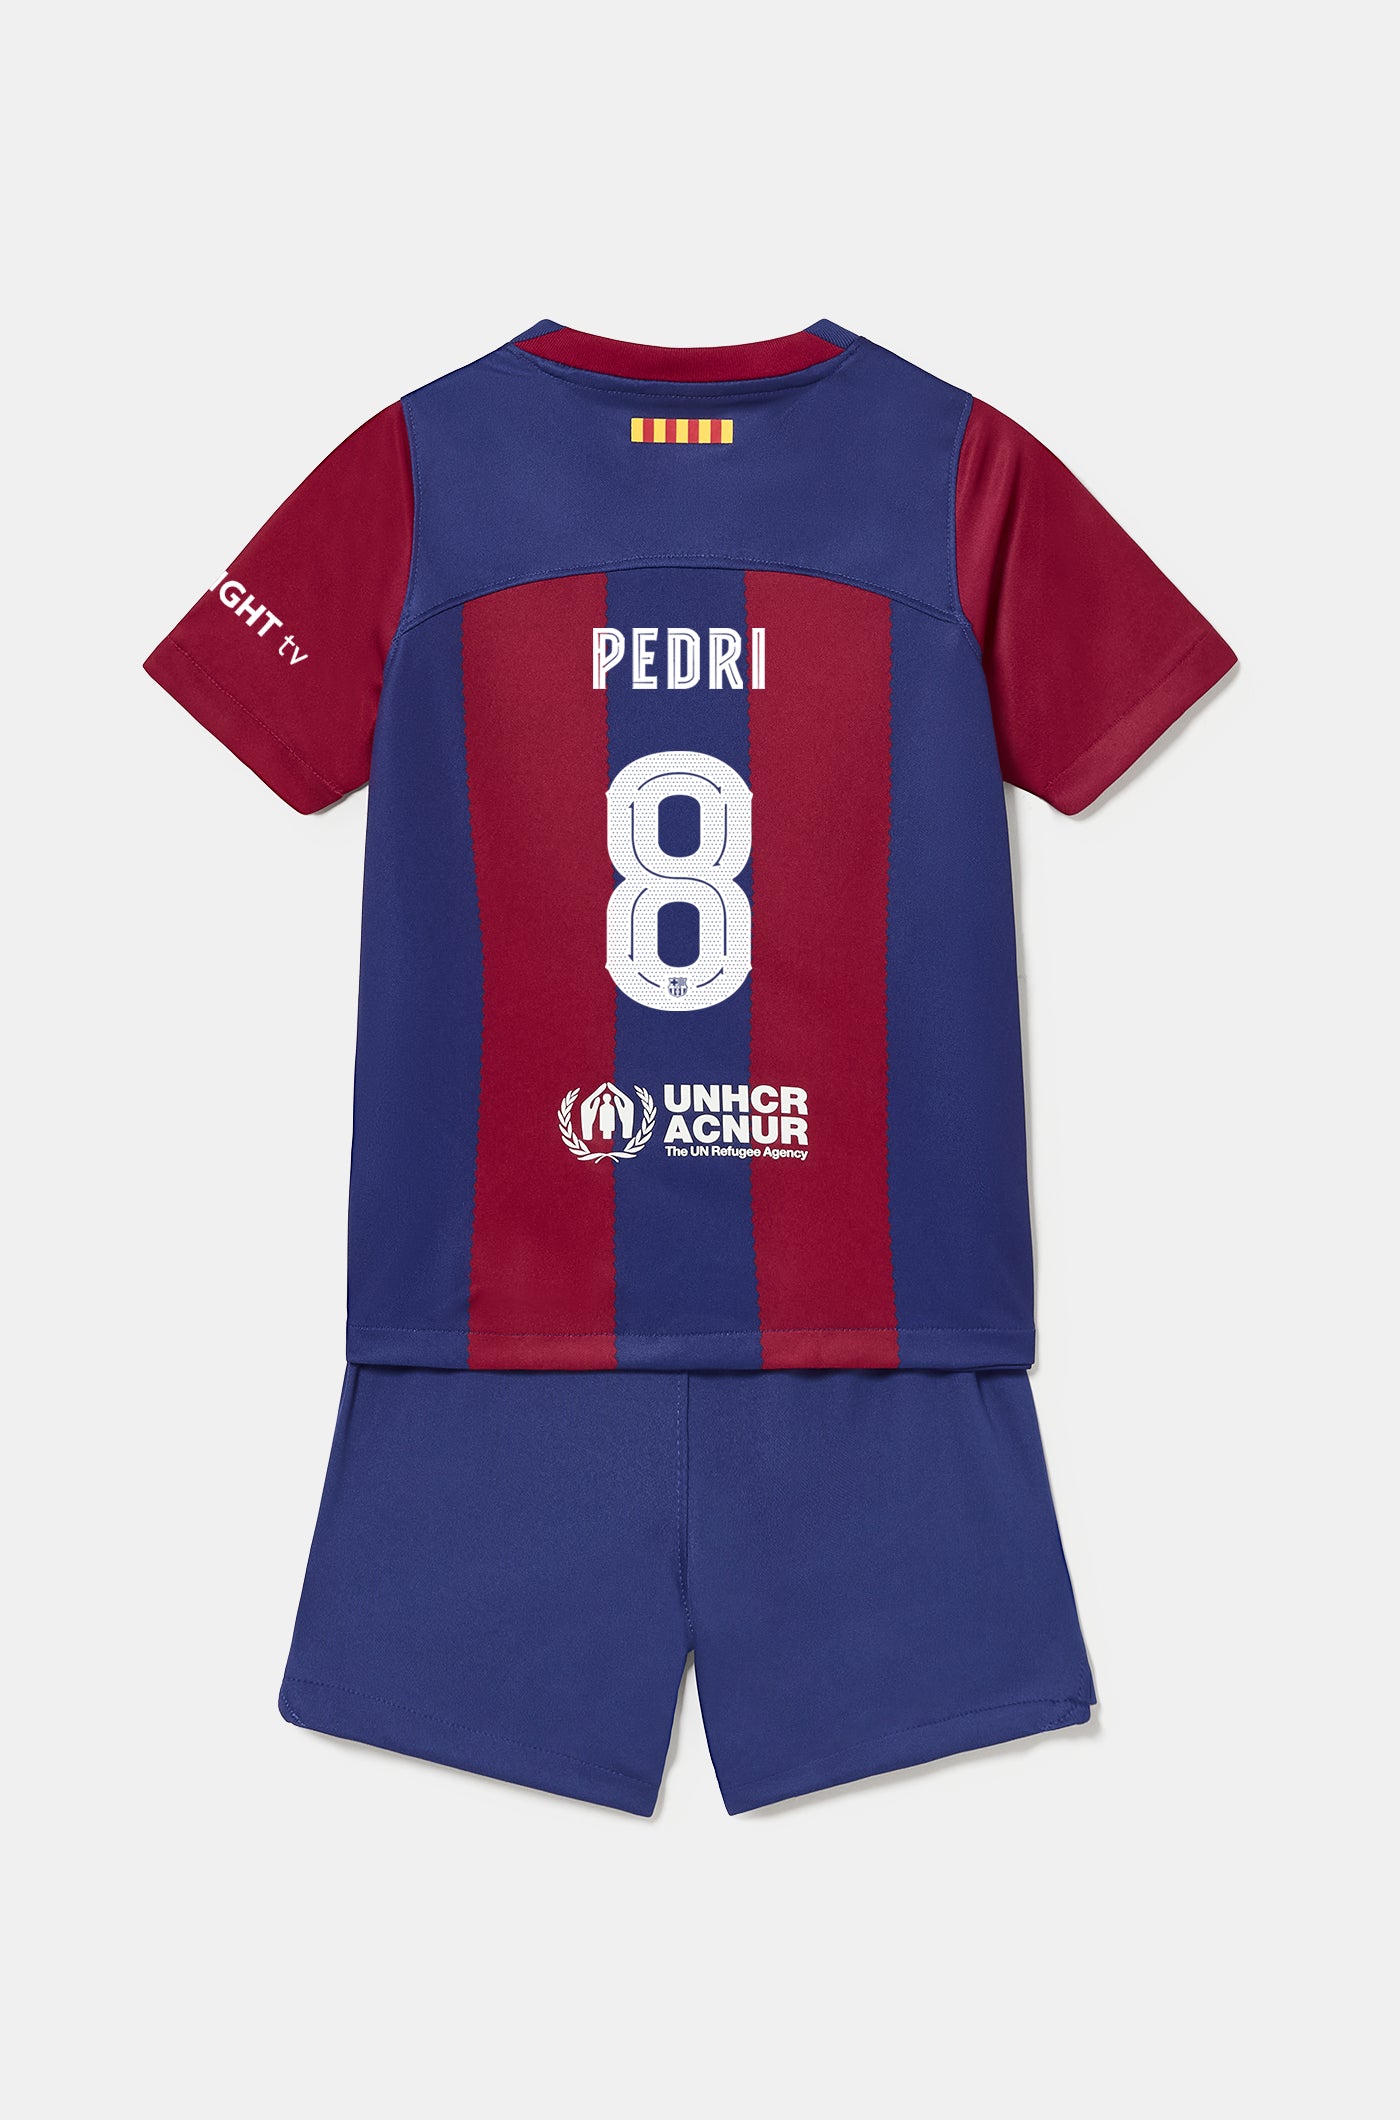 Conjunt primer equipament FC Barcelona 23/24 - Nen/a petit/a - PEDRI 